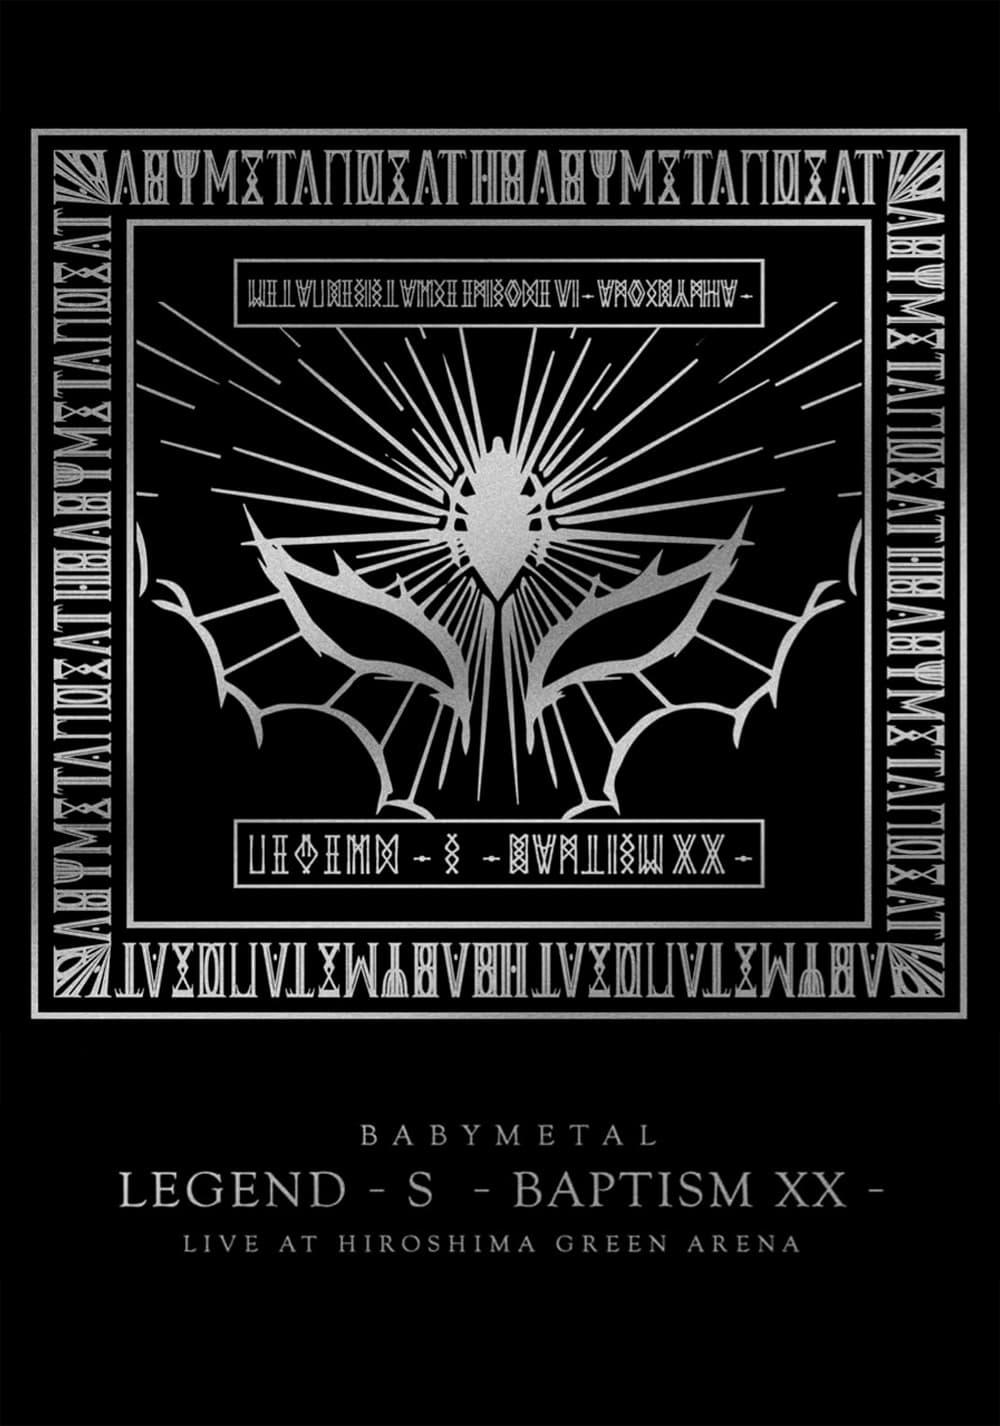 BABYMETAL - Legend - S - Baptism XX poster